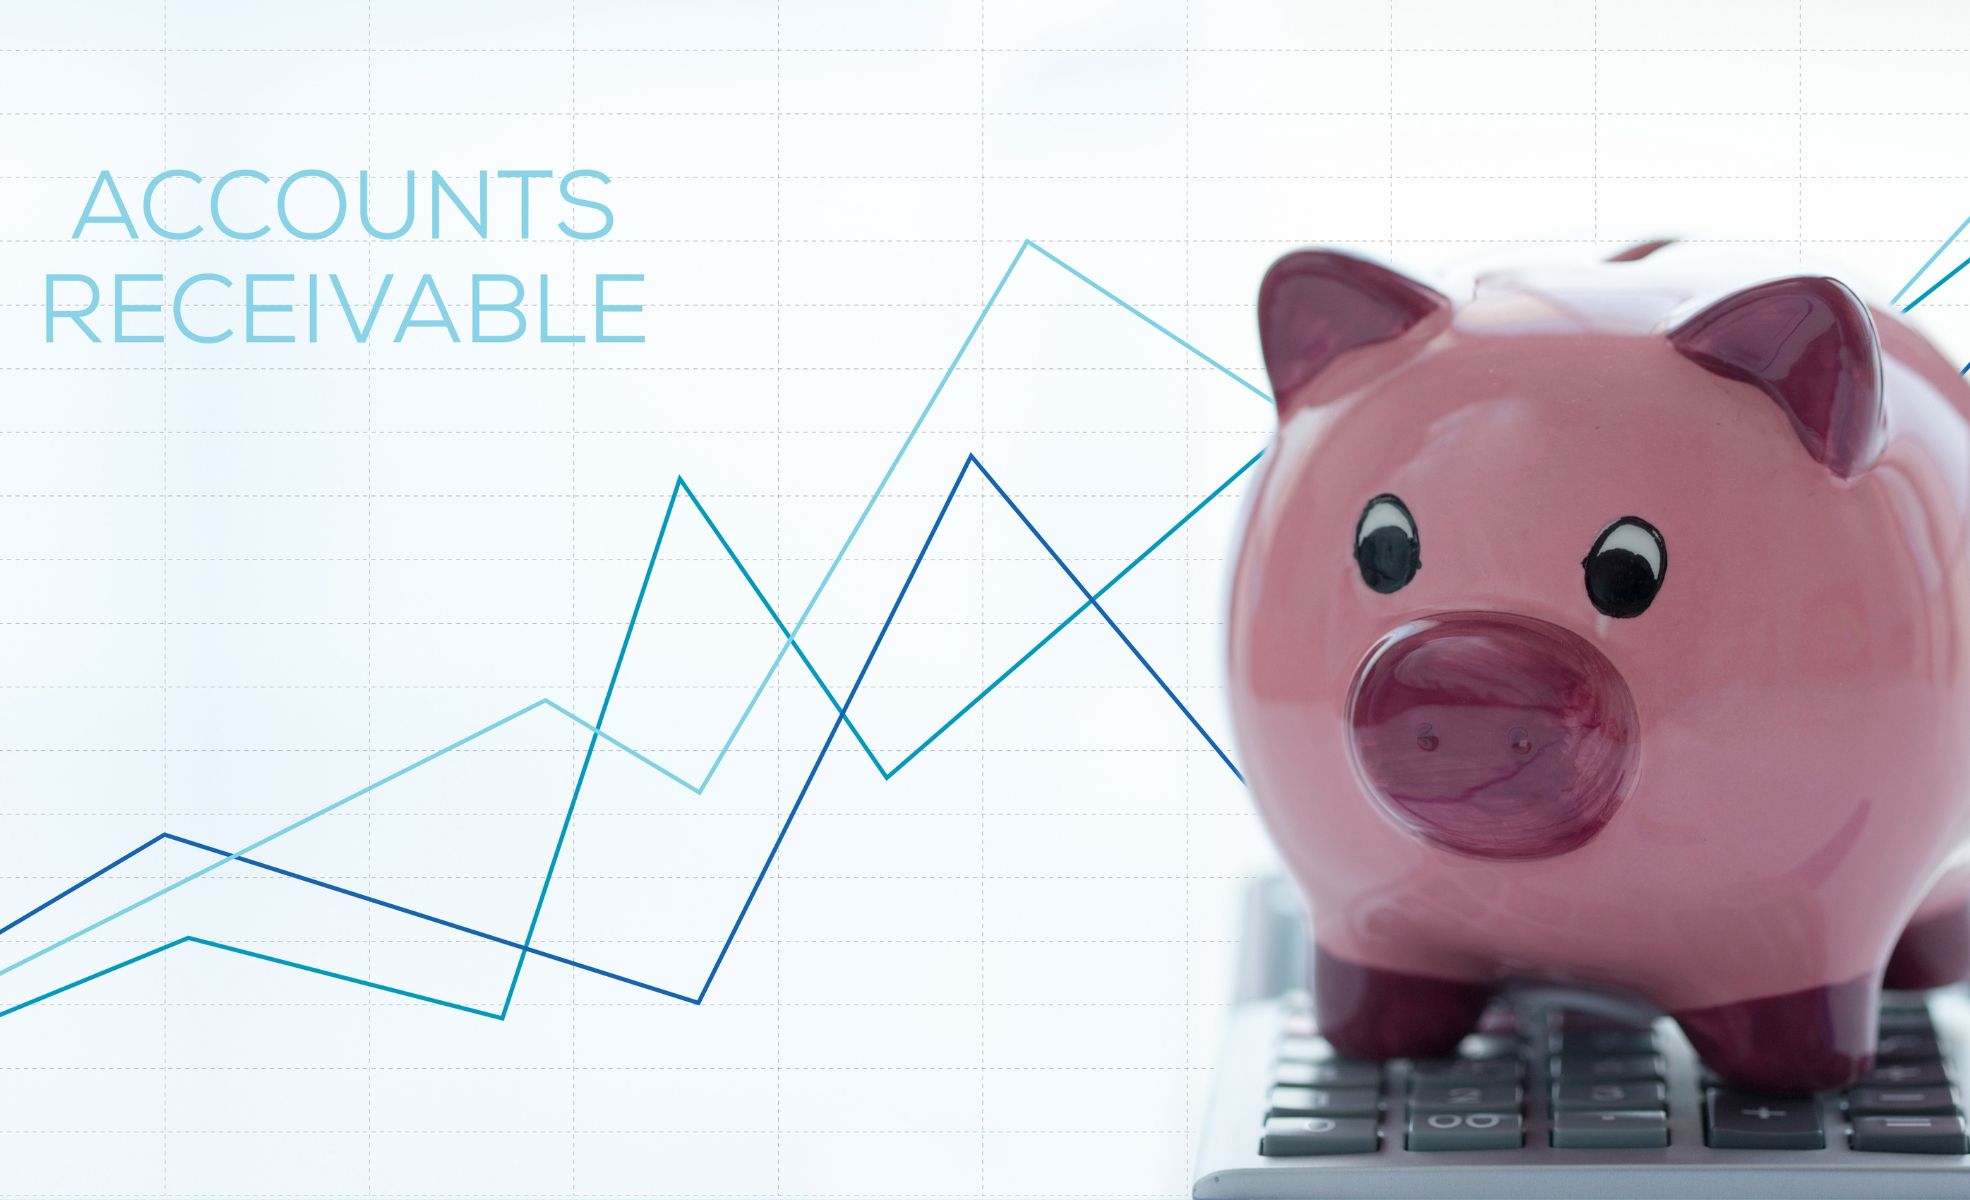 Piggy Bank And Title "Accounts Receivable"